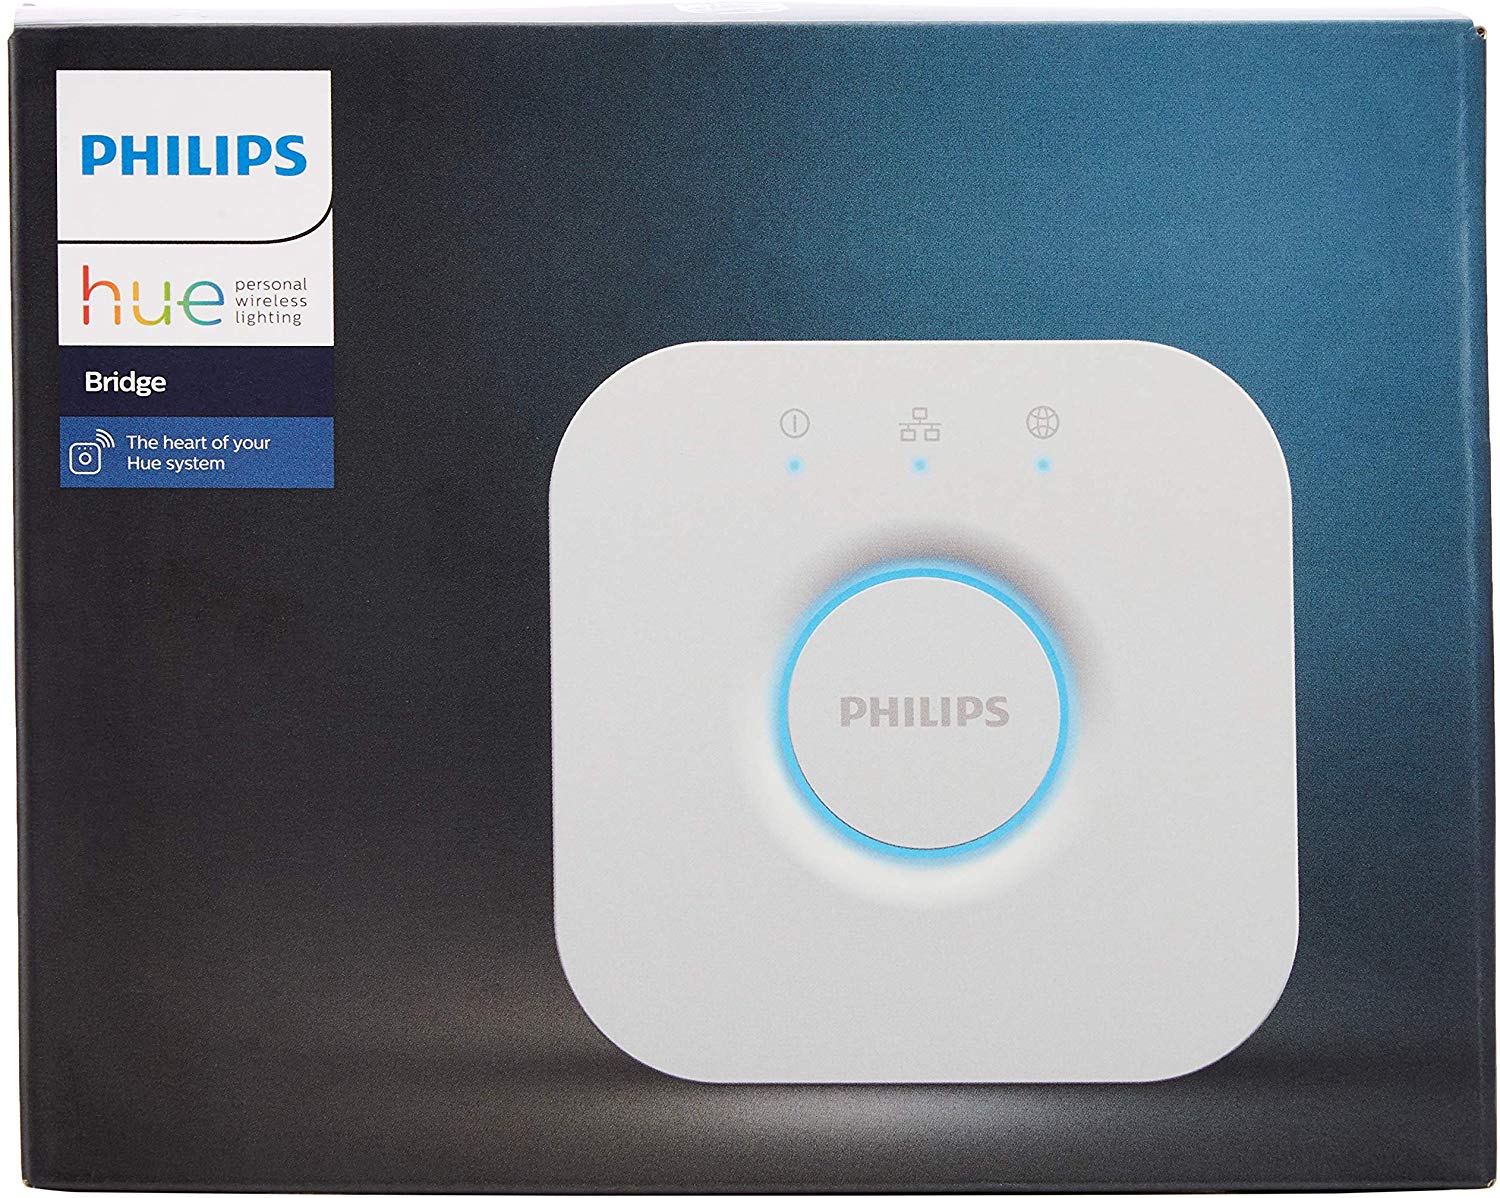 philips hue Bridge compatible DPHD ONLINE